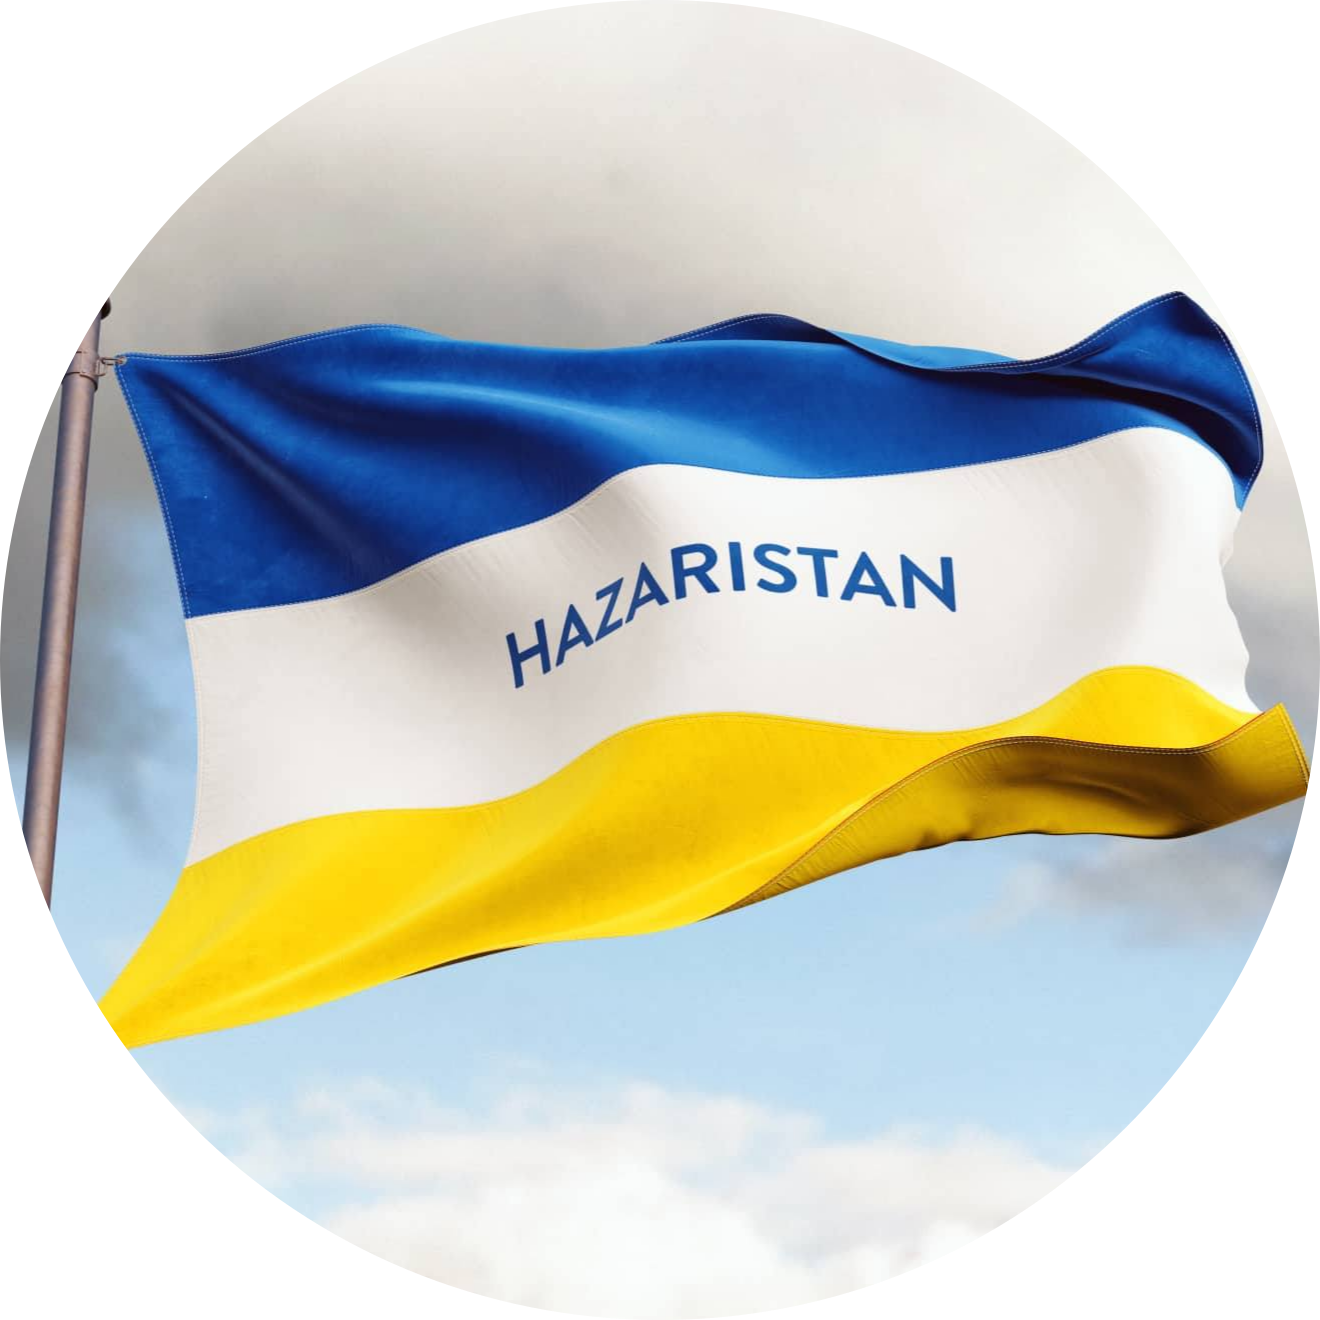 Hazaristan Charter to Establish the Dai State of Hazaristan